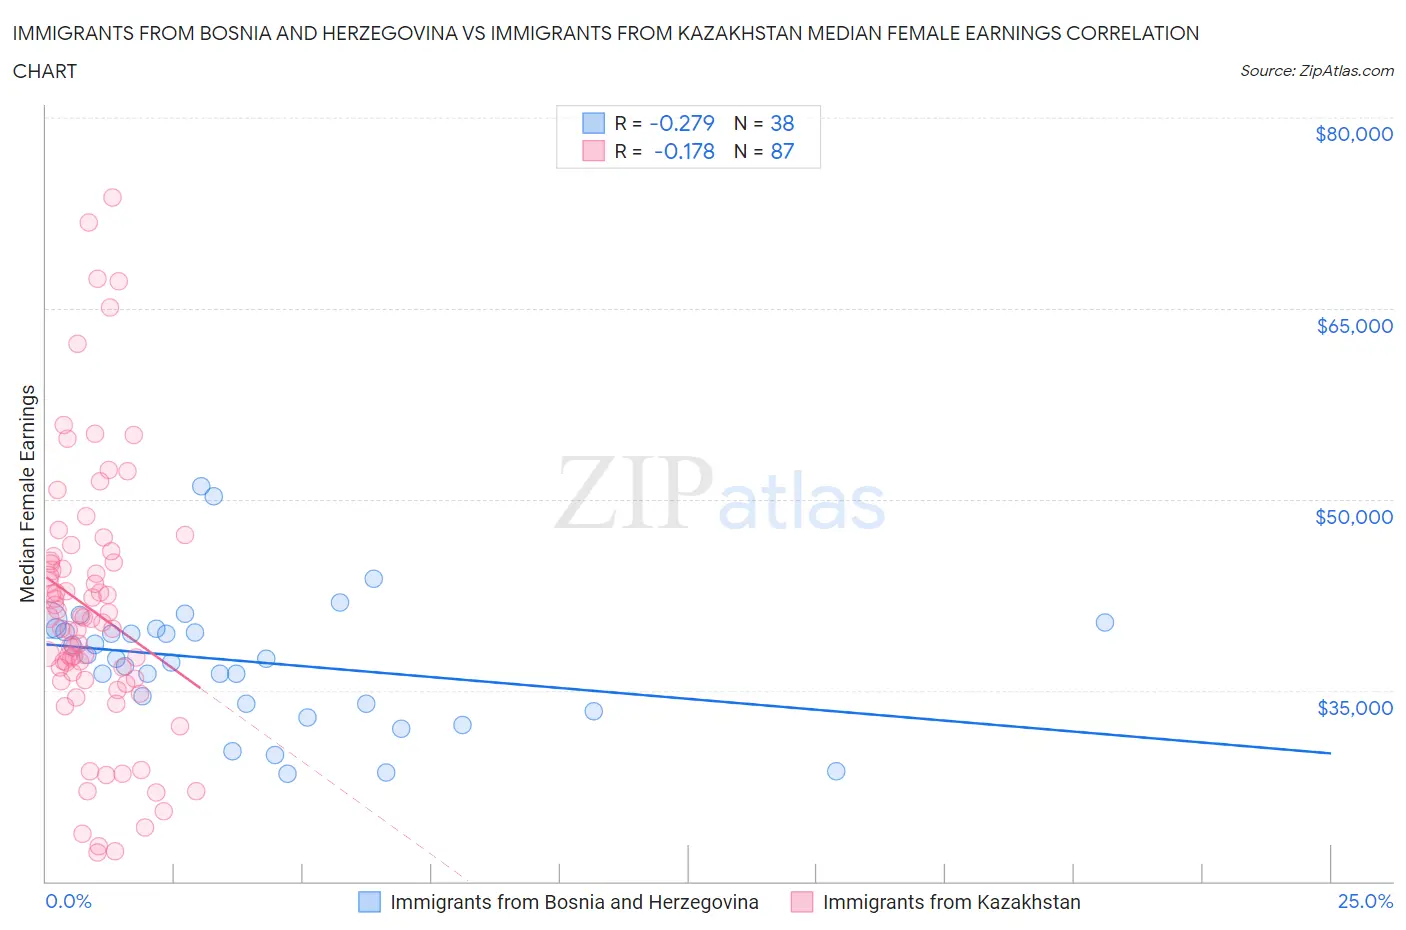 Immigrants from Bosnia and Herzegovina vs Immigrants from Kazakhstan Median Female Earnings